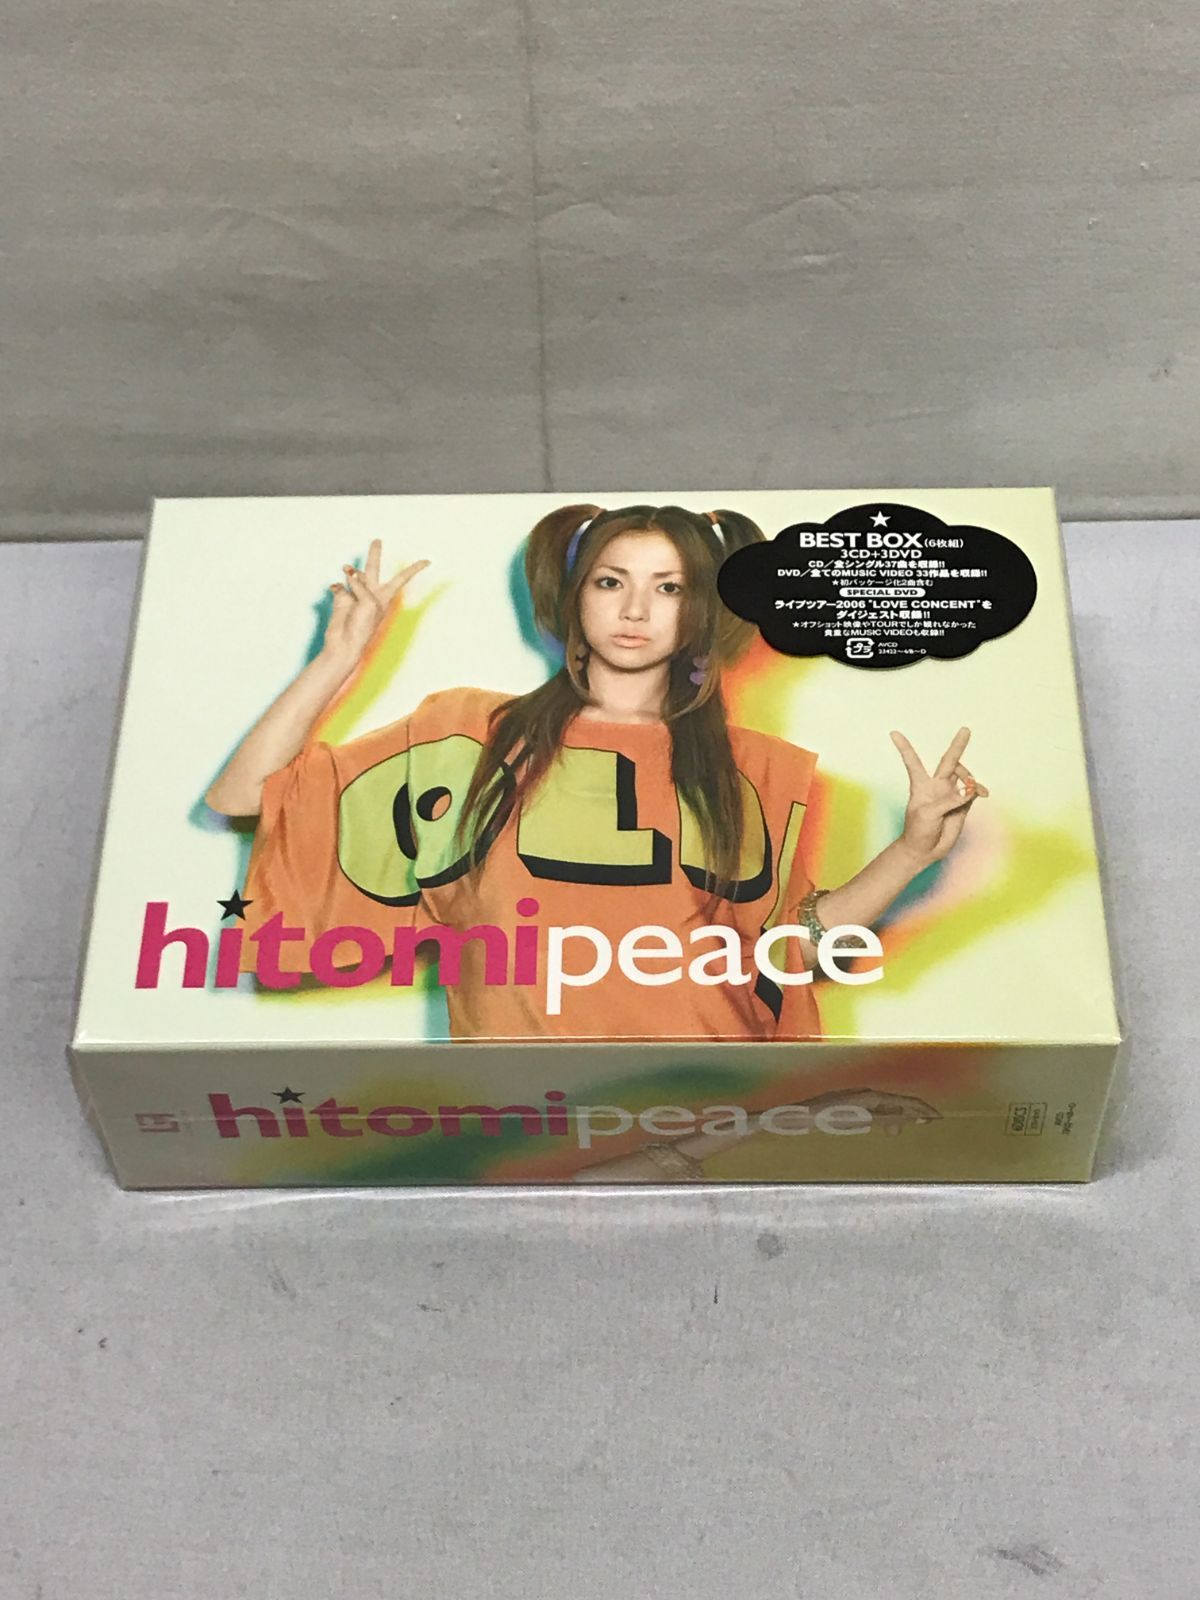 ｈｉｔｏｍｉ peace コンプリートBOX【3DVD付】Limited Edition - 参考書